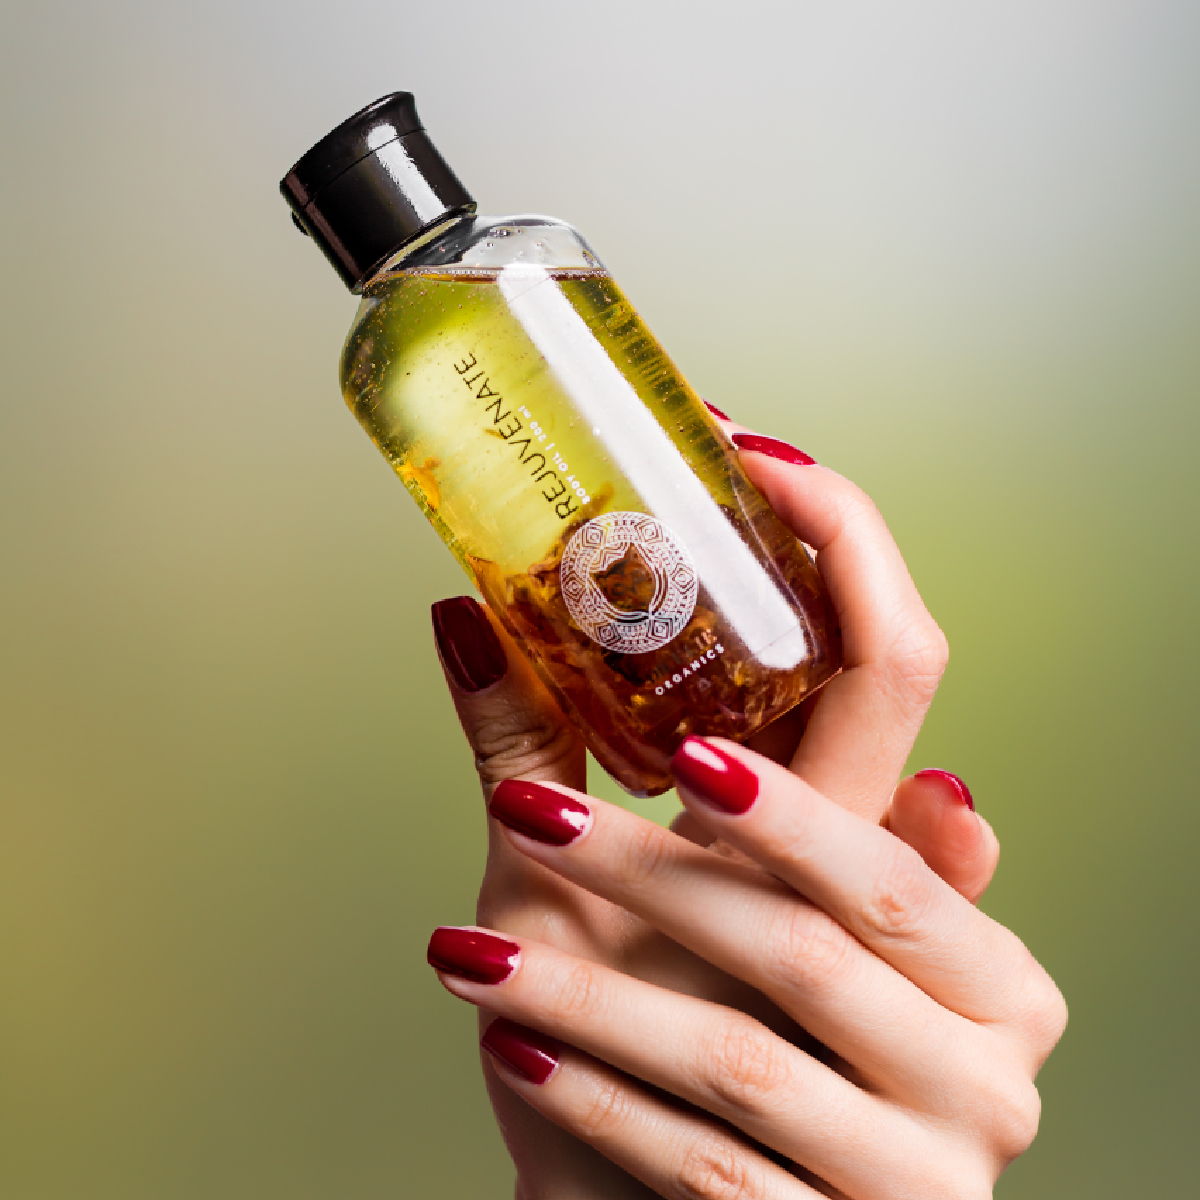 Natural Body Oil for Dry Skin - Moisturize & Rejuvenate!